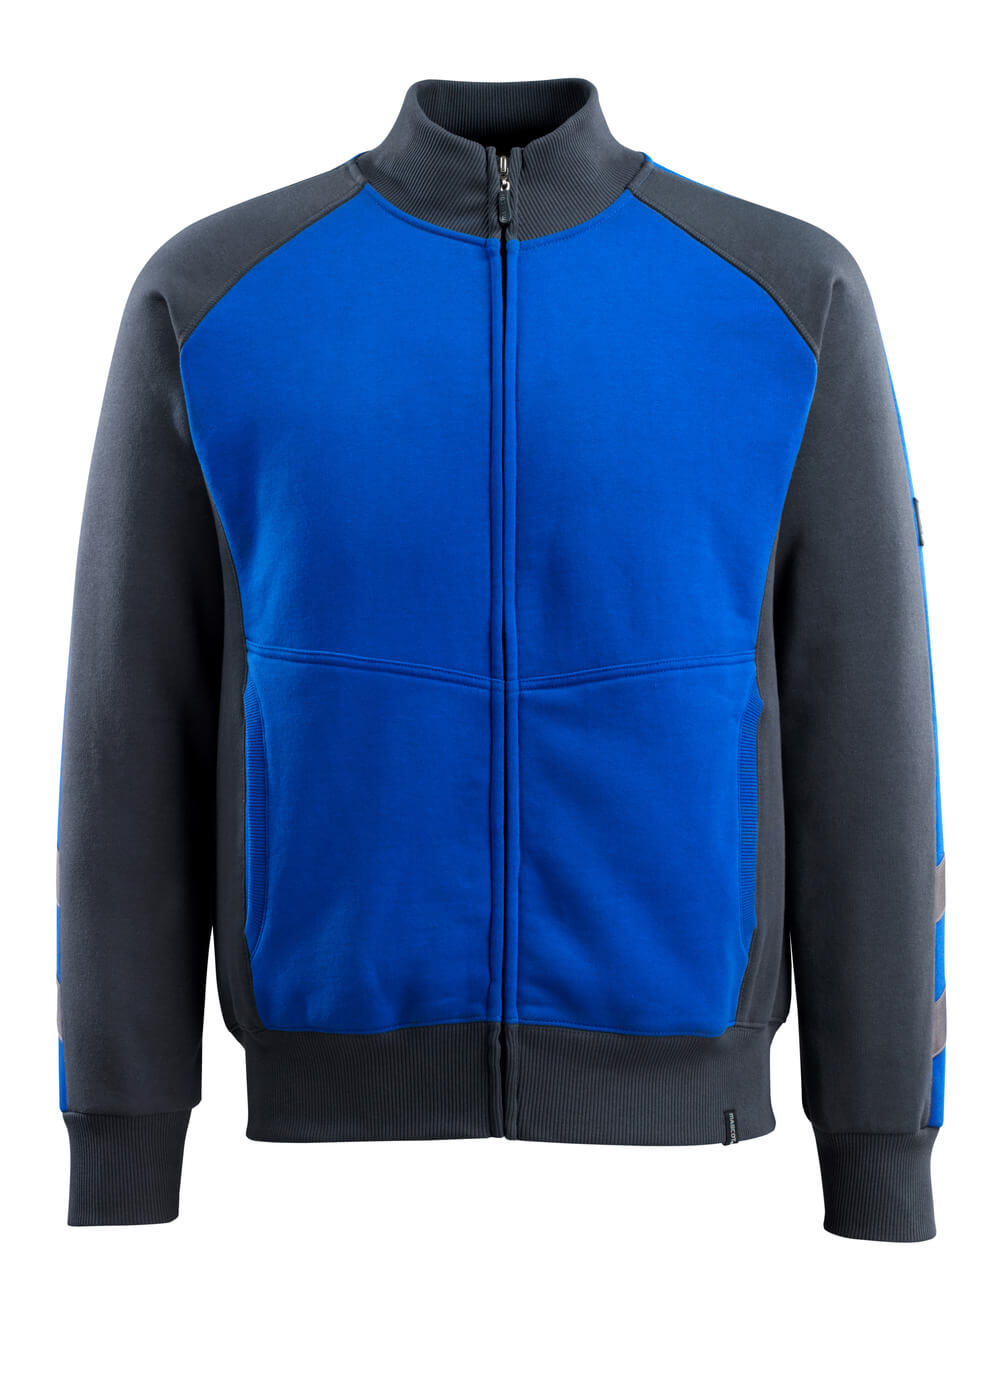 MASCOT®UNIQUE Sweatshirt with zipper Amberg 50565 - DaltonSafety